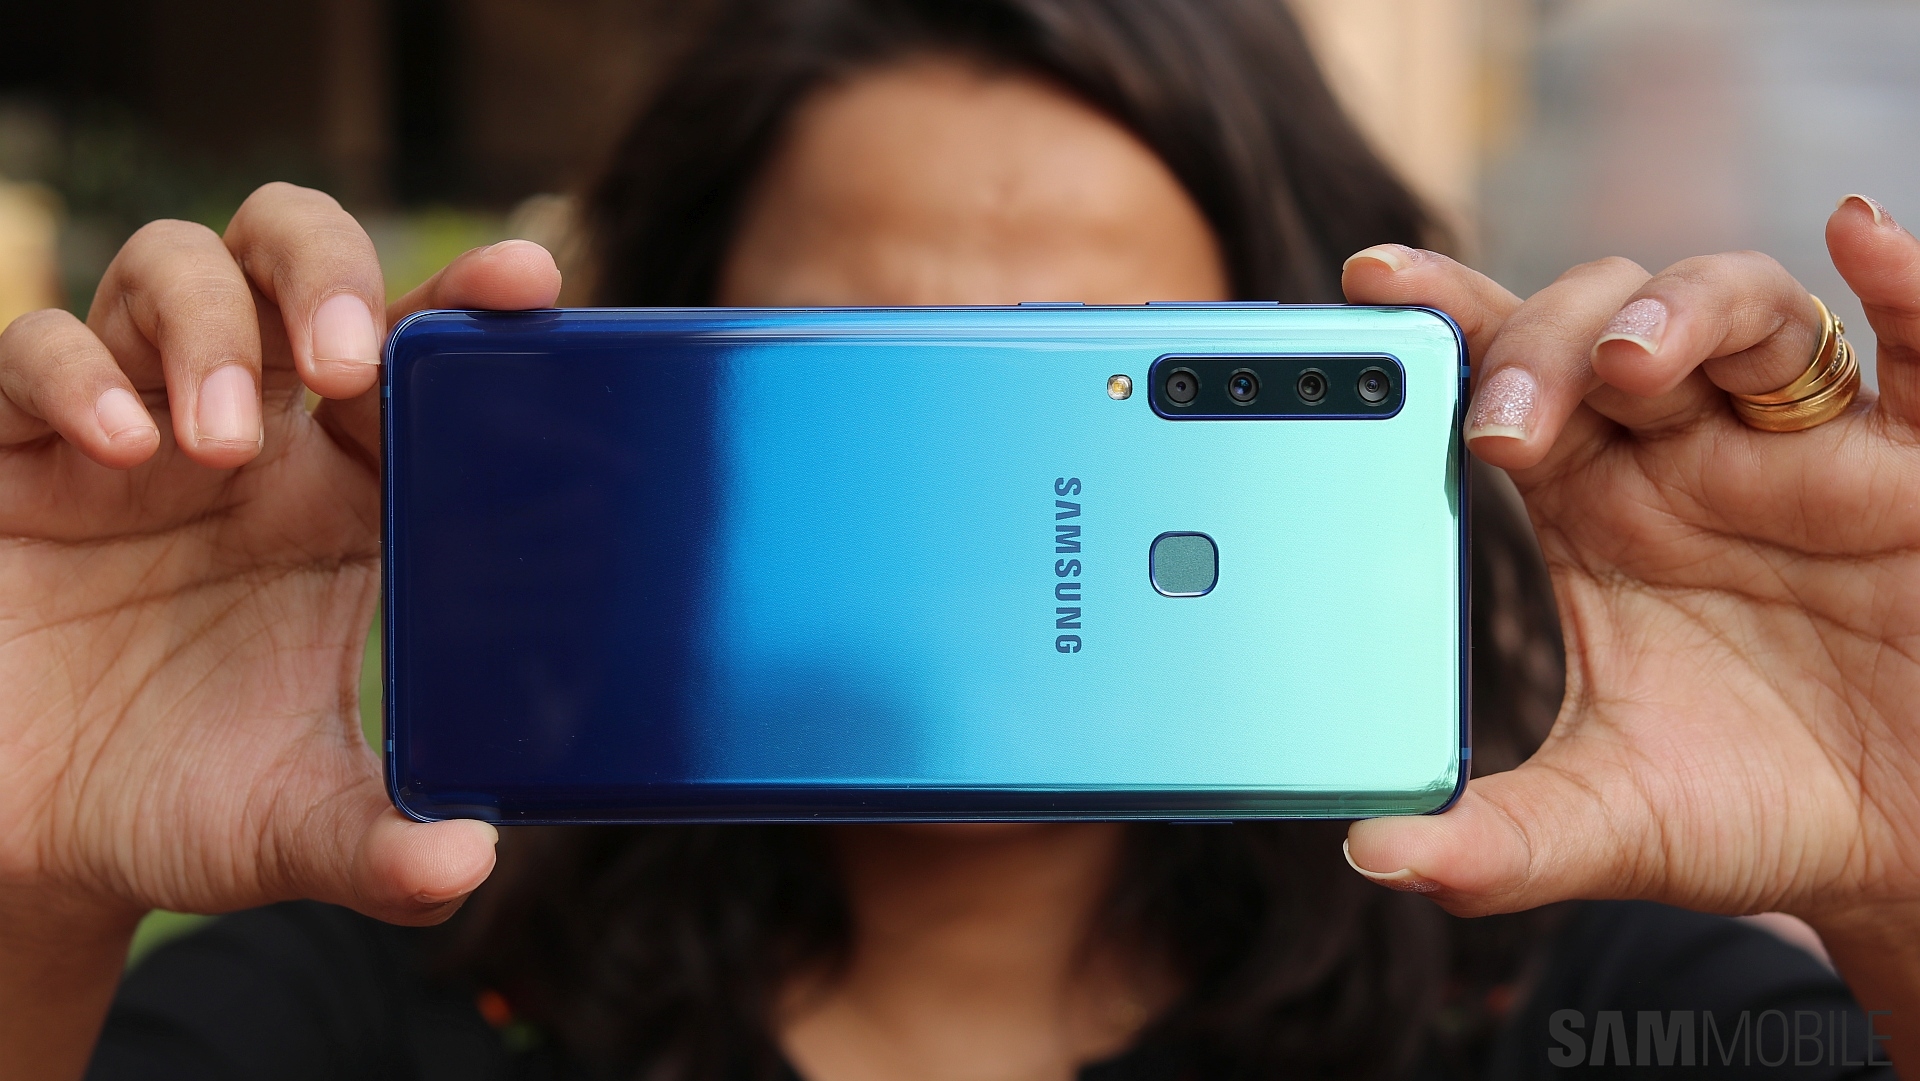 Samsung Galaxy A9 (2018) Review - PhoneArena